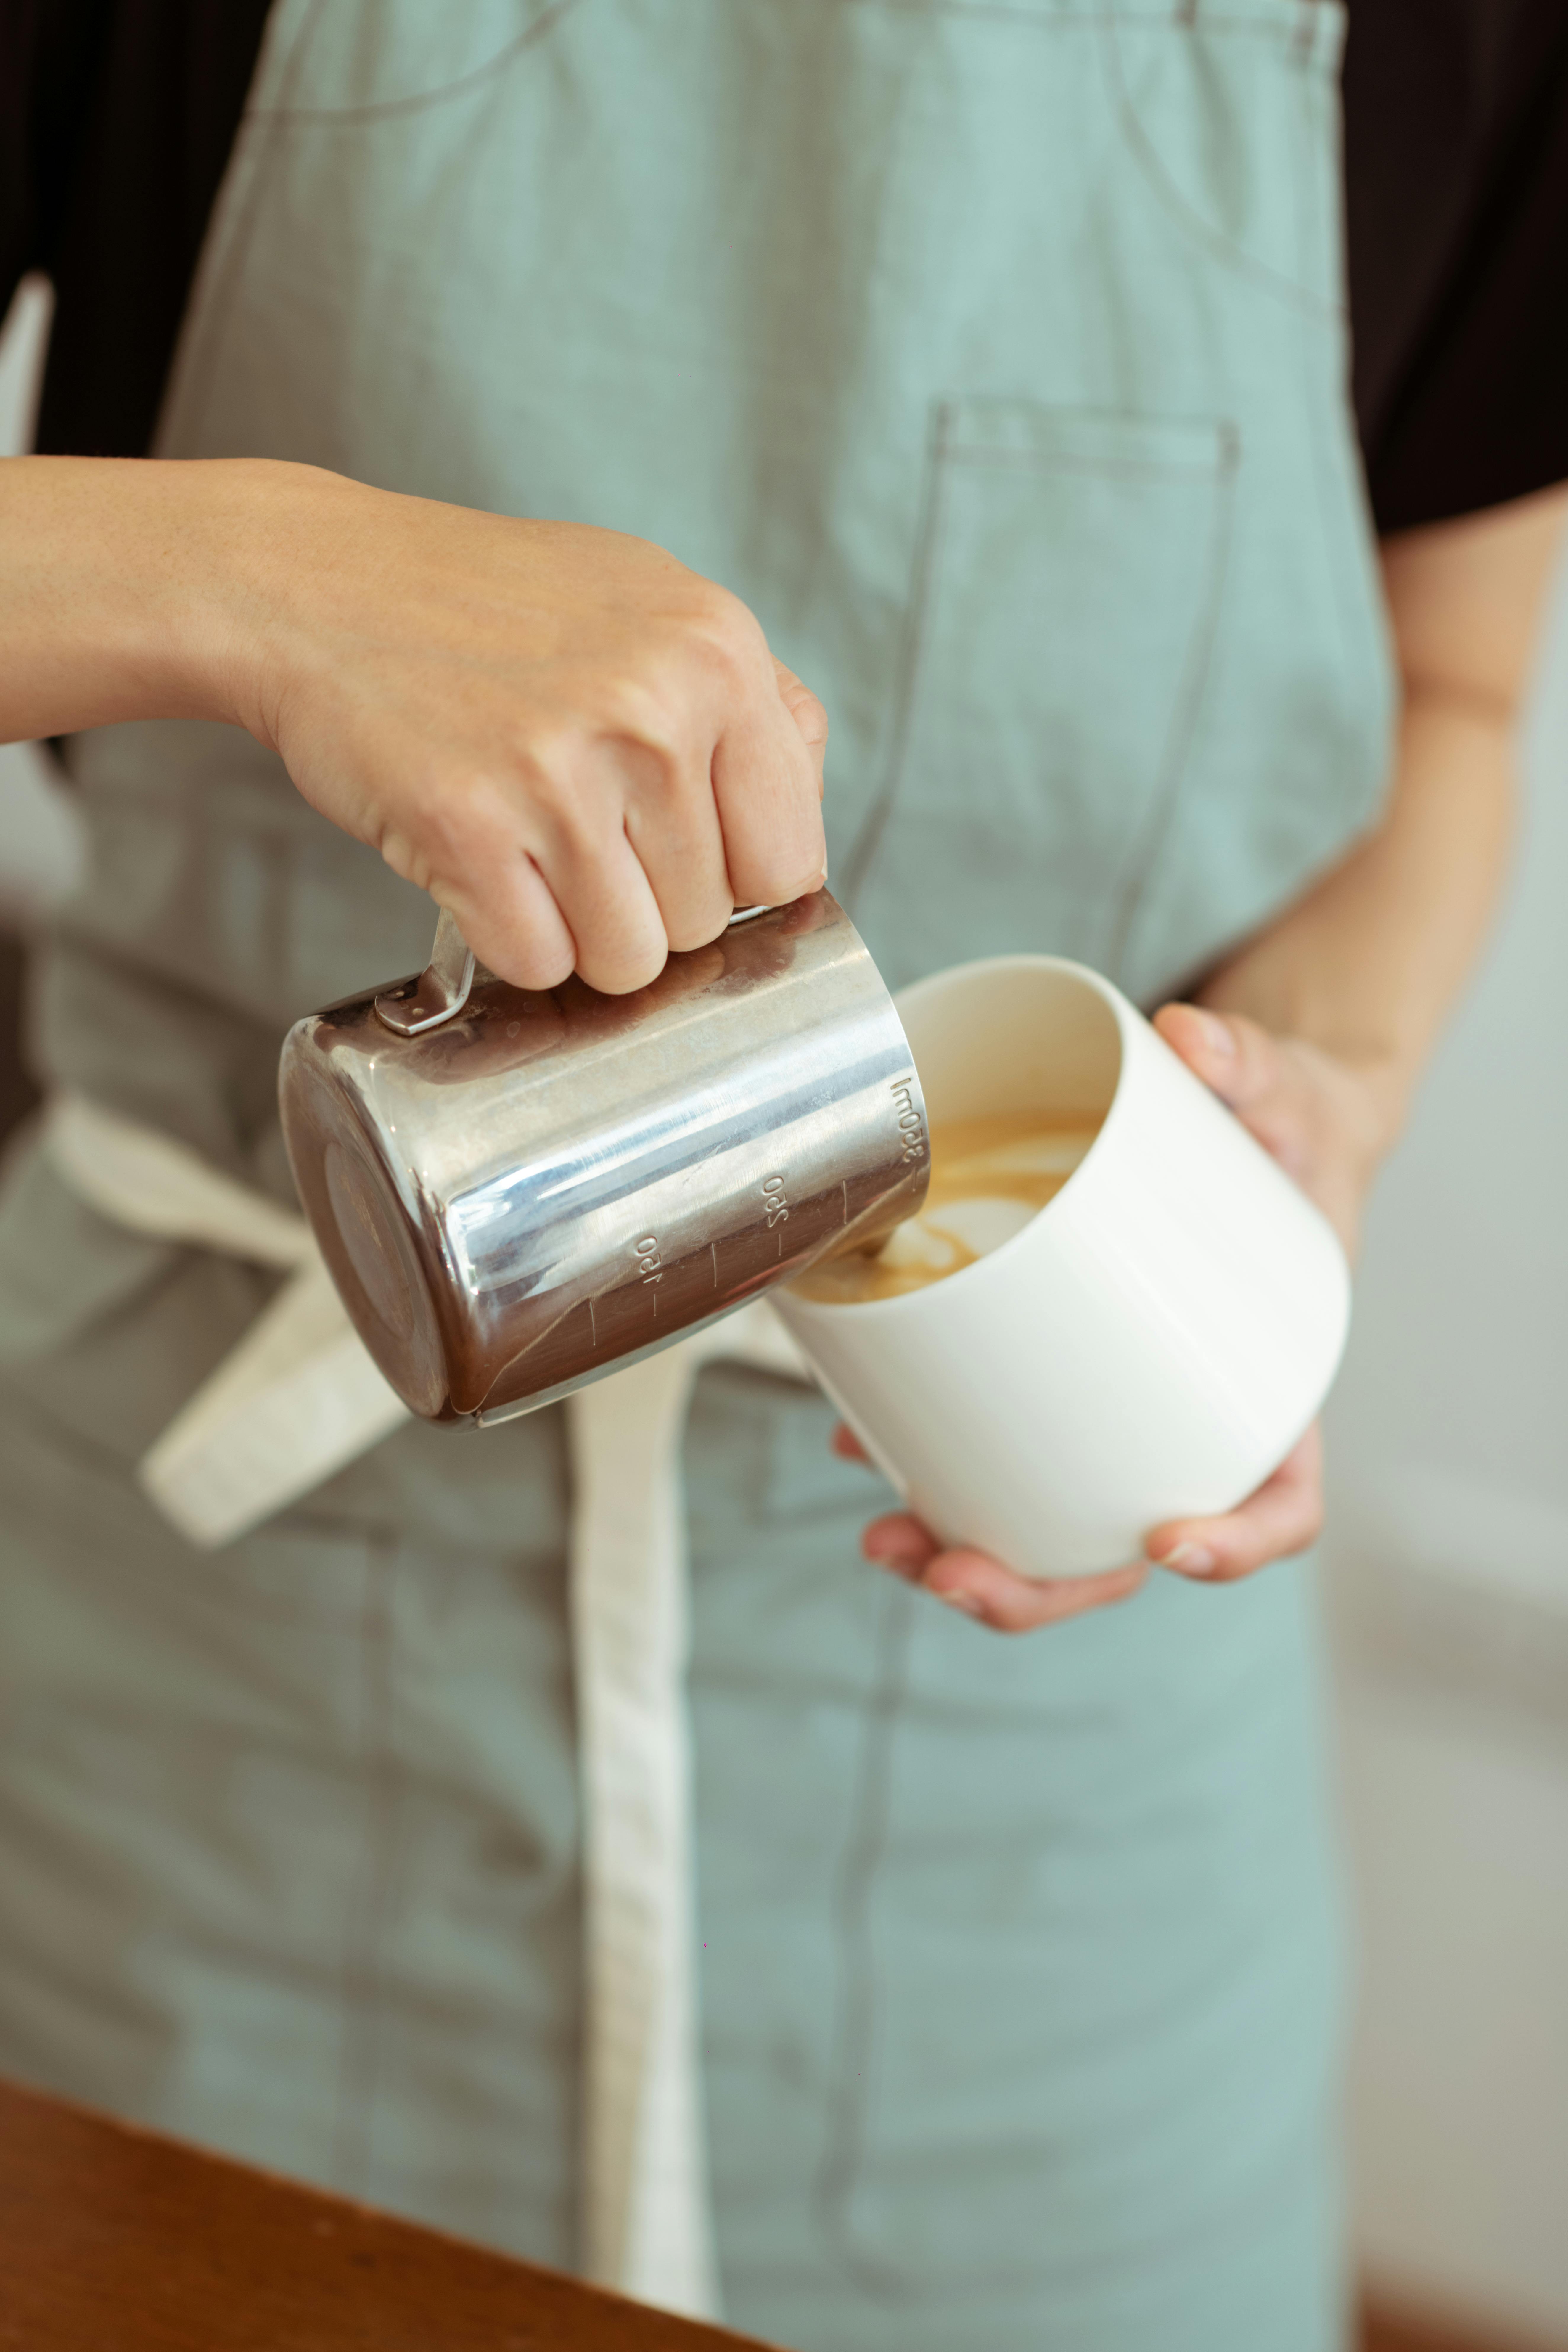 crop barista preparing cappuccino and pouring milk into cup